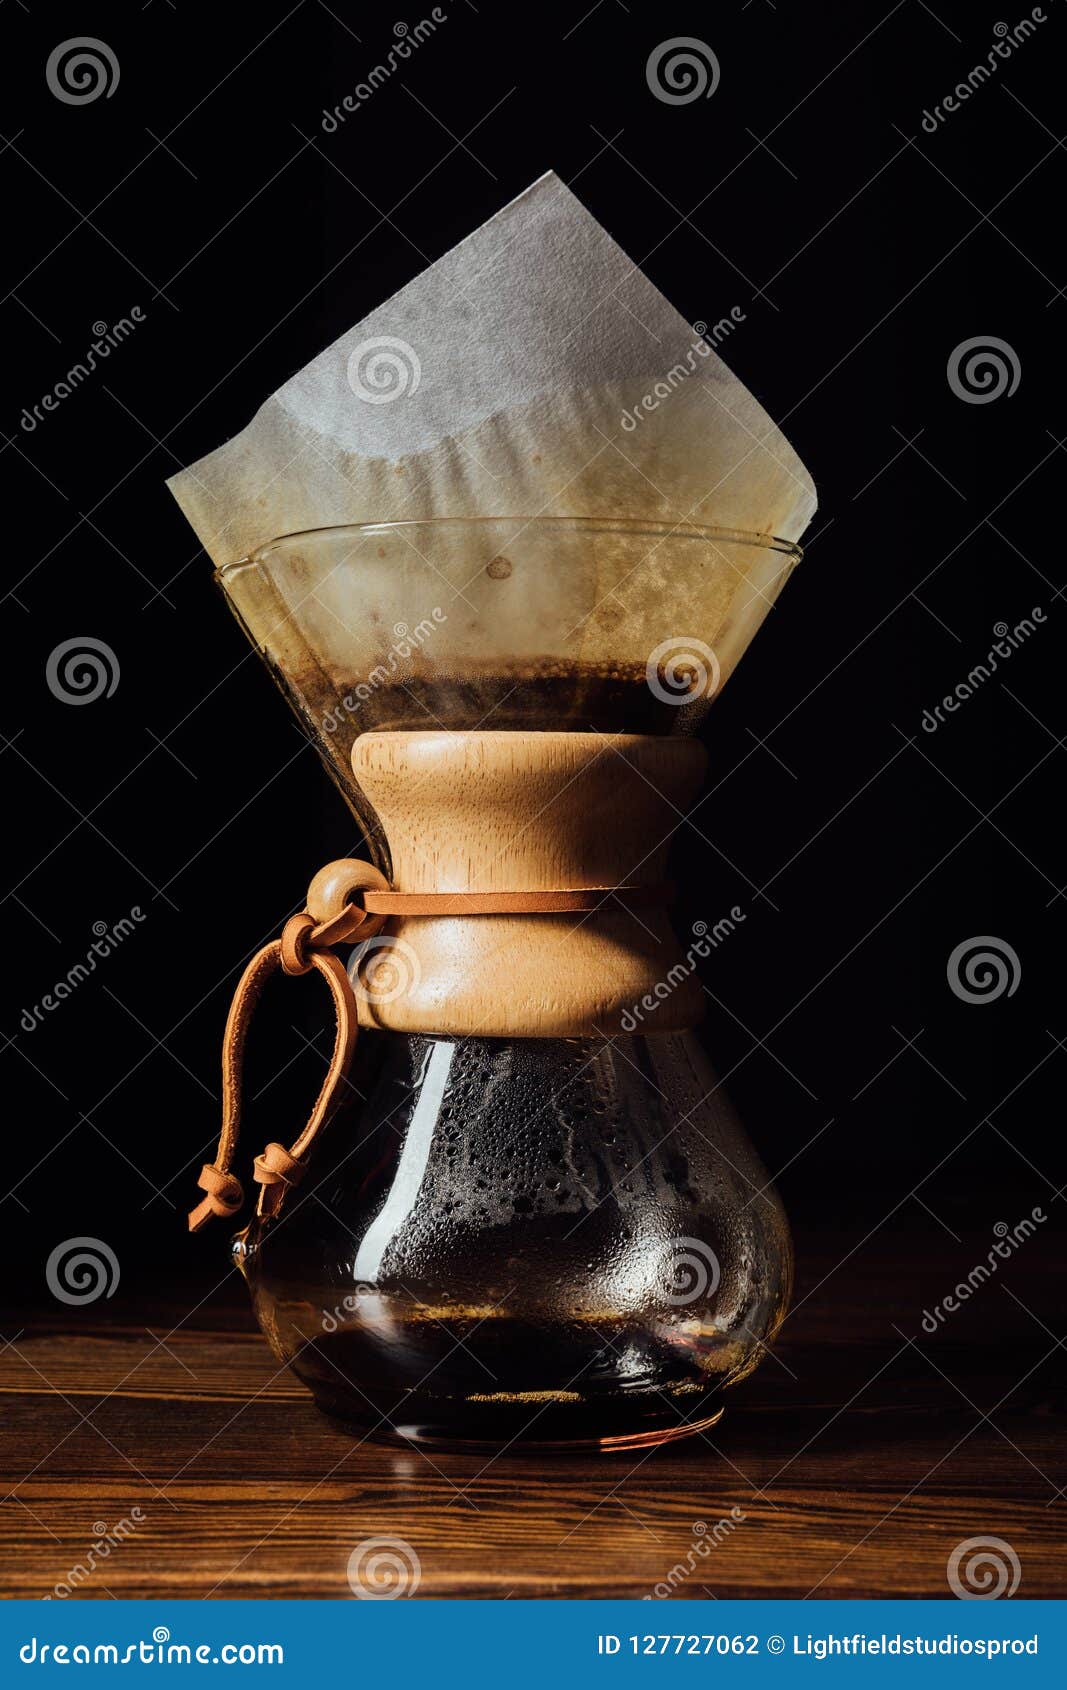 https://thumbs.dreamstime.com/z/closeup-shot-alternative-coffee-chemex-filter-cone-127727062.jpg